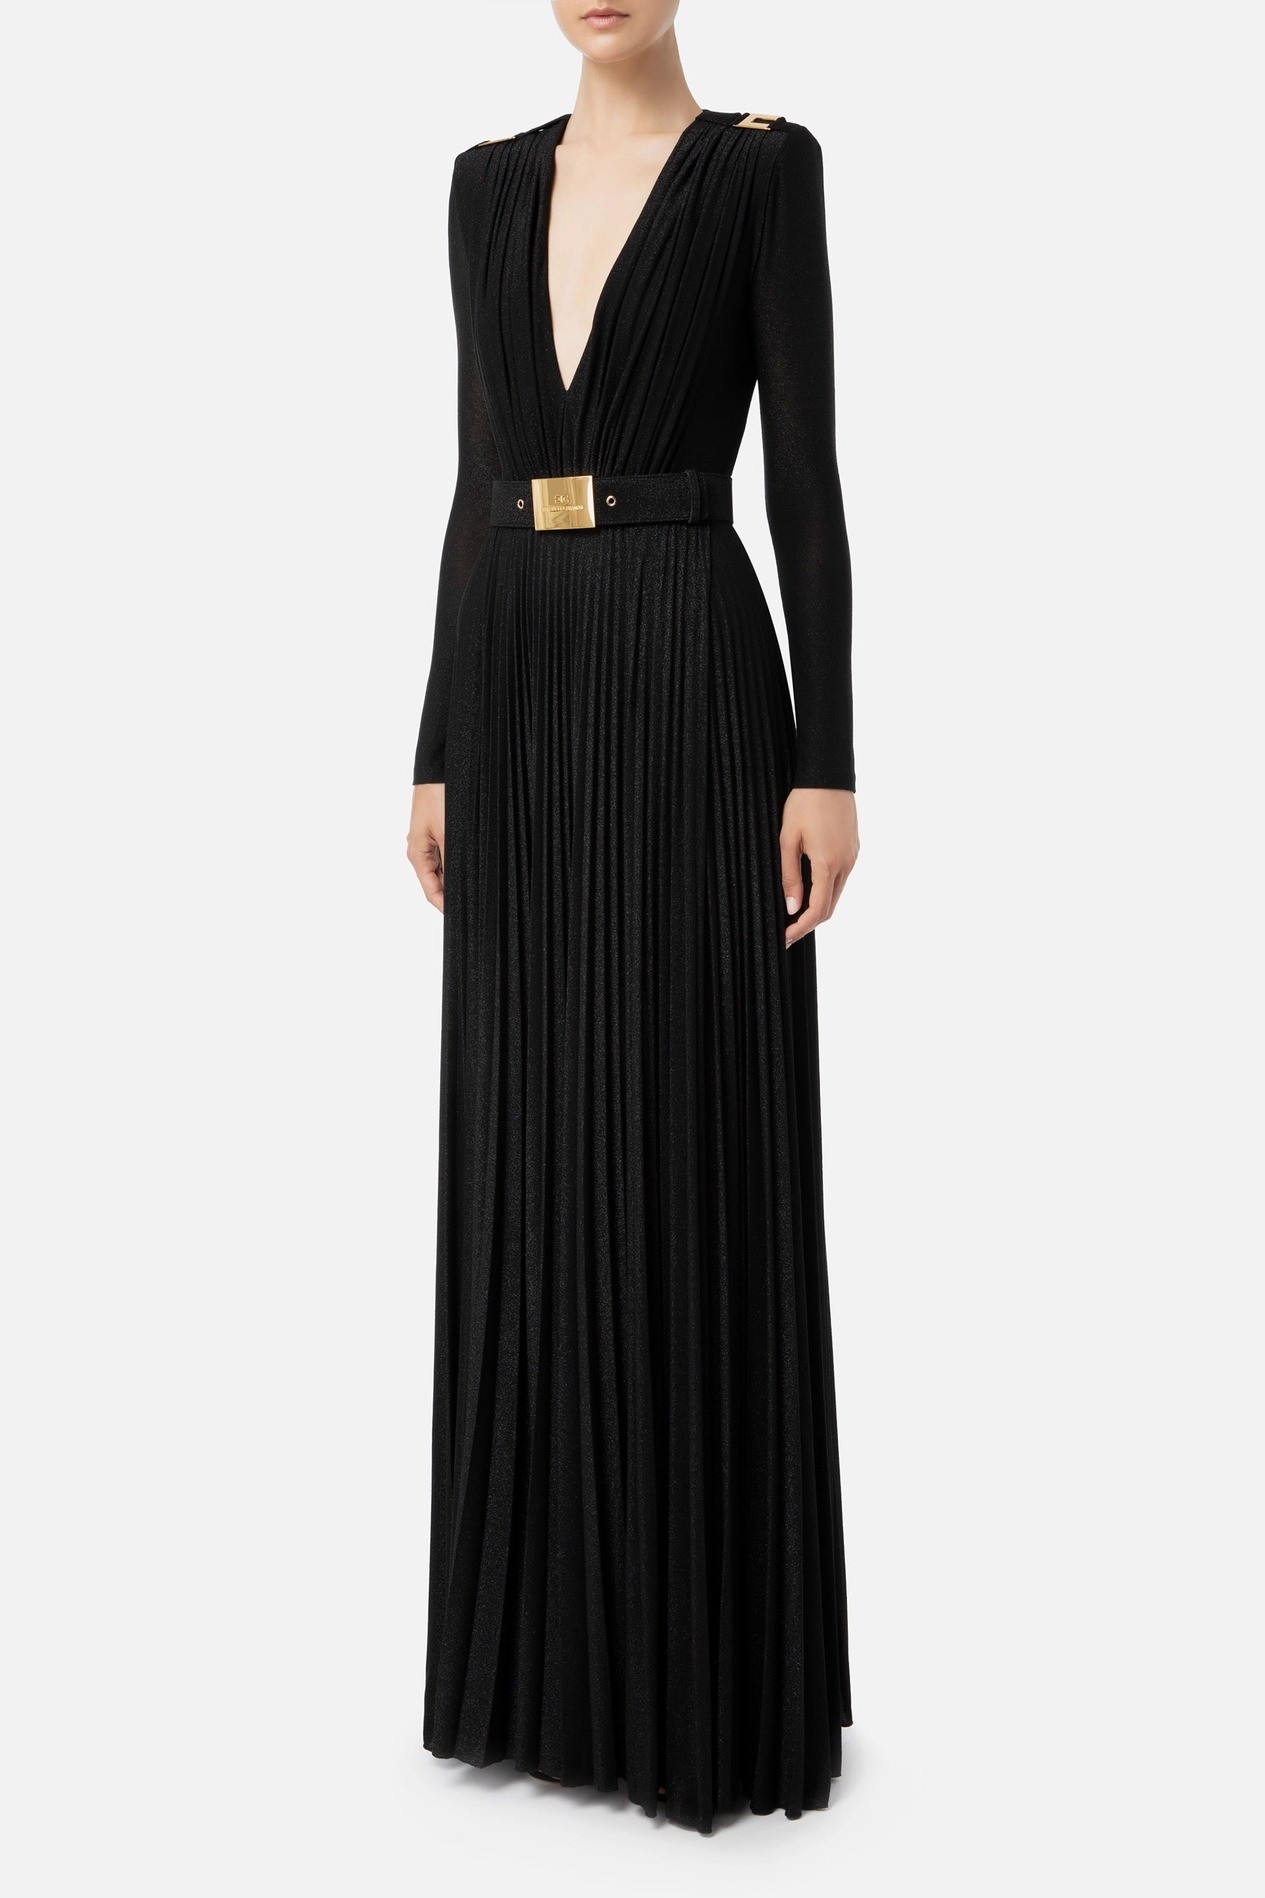 Elisabetta Franchi - Red Carpet lurex jersey dress - Black